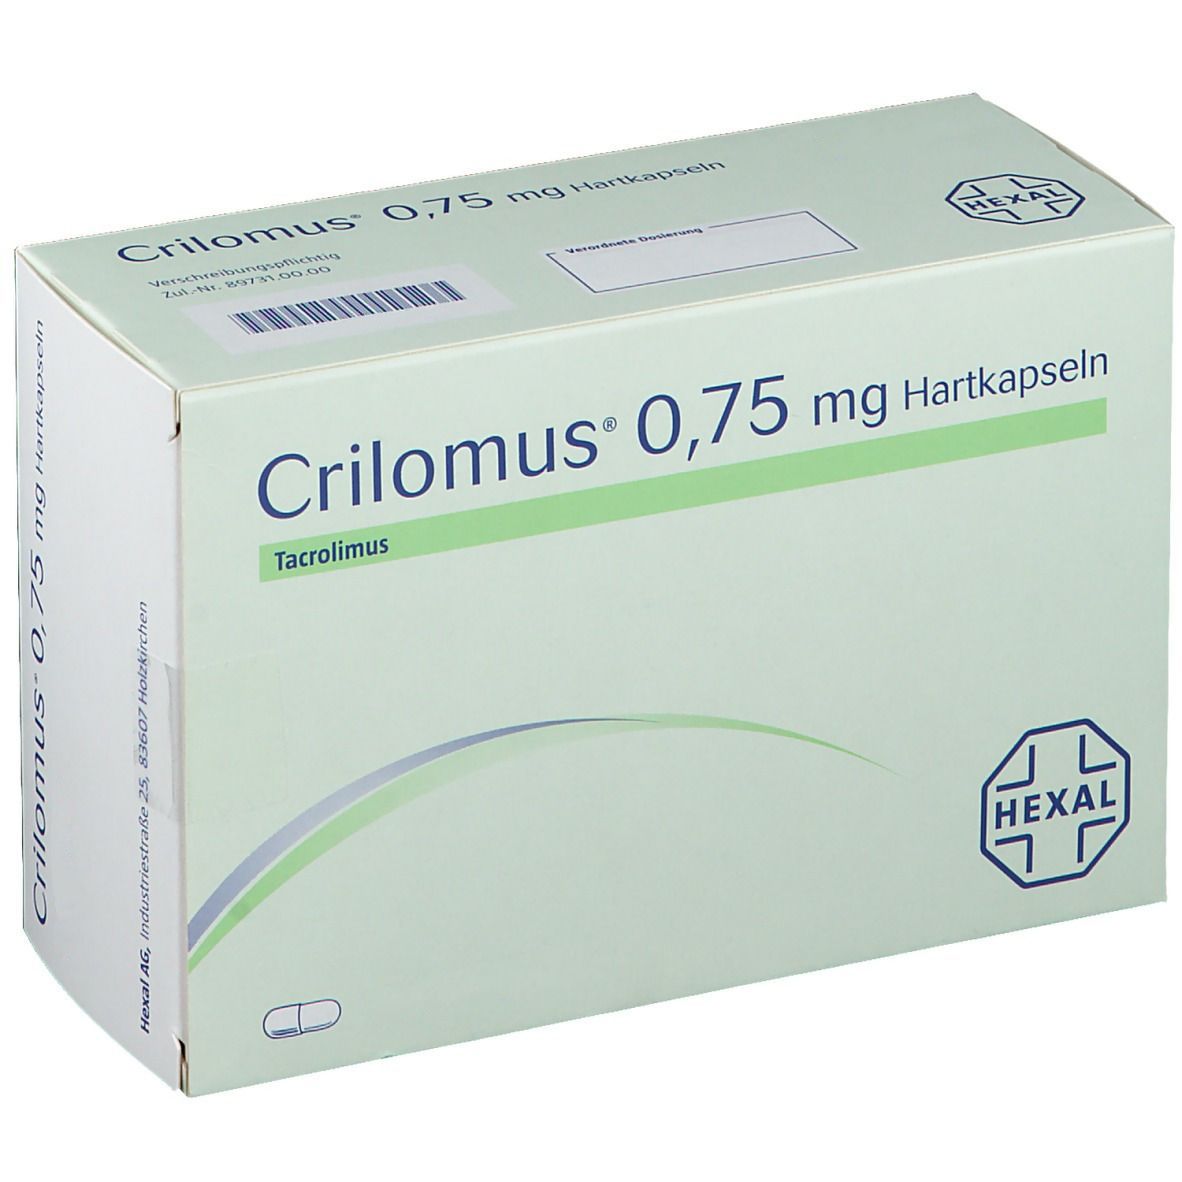 Crilomus® 0,75 mg